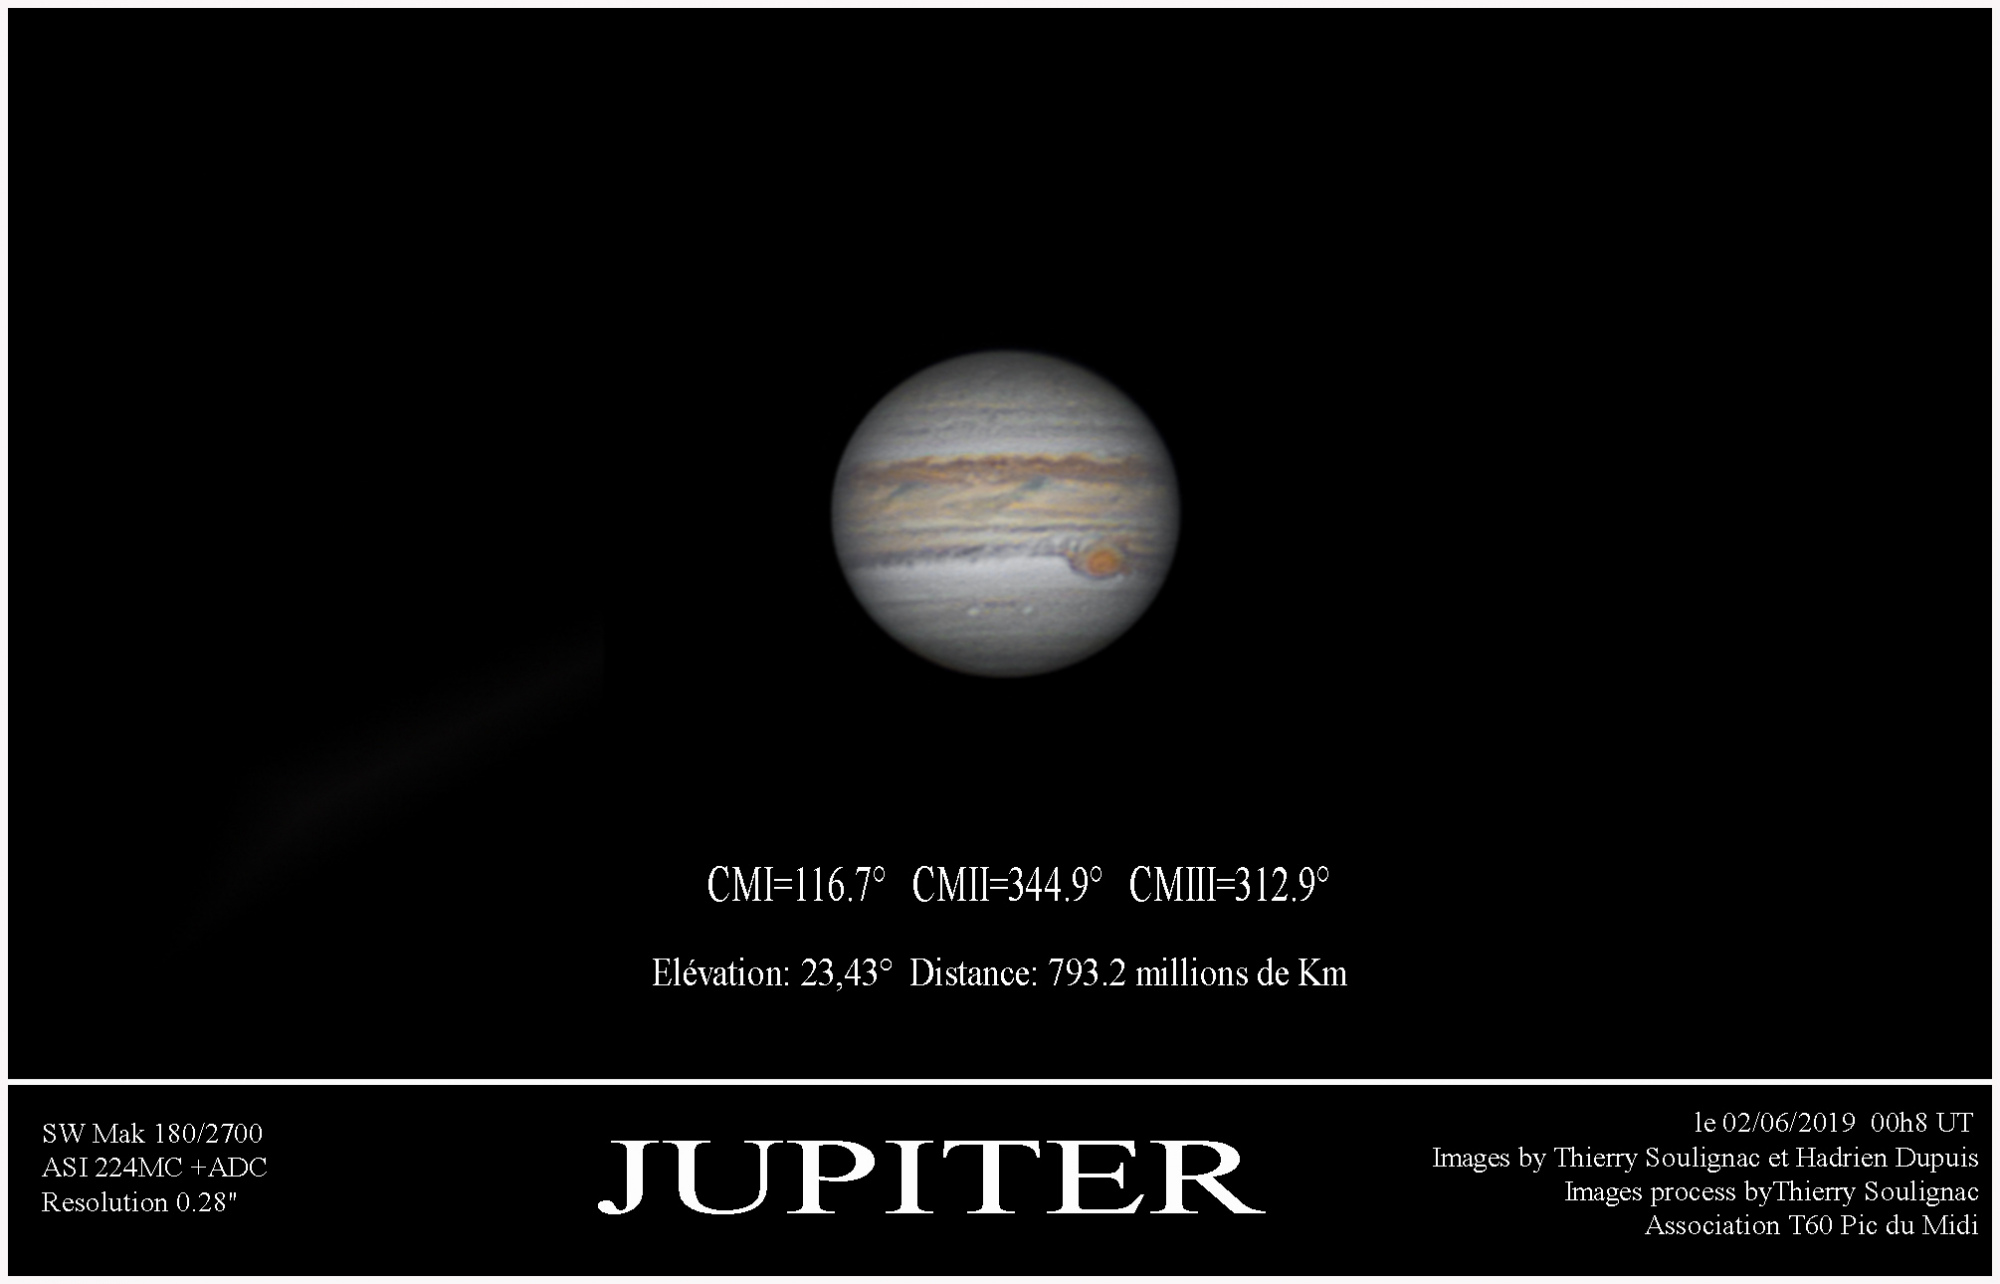 presentation Jupiter 02-06-2019 00h08 derot copy.jpg